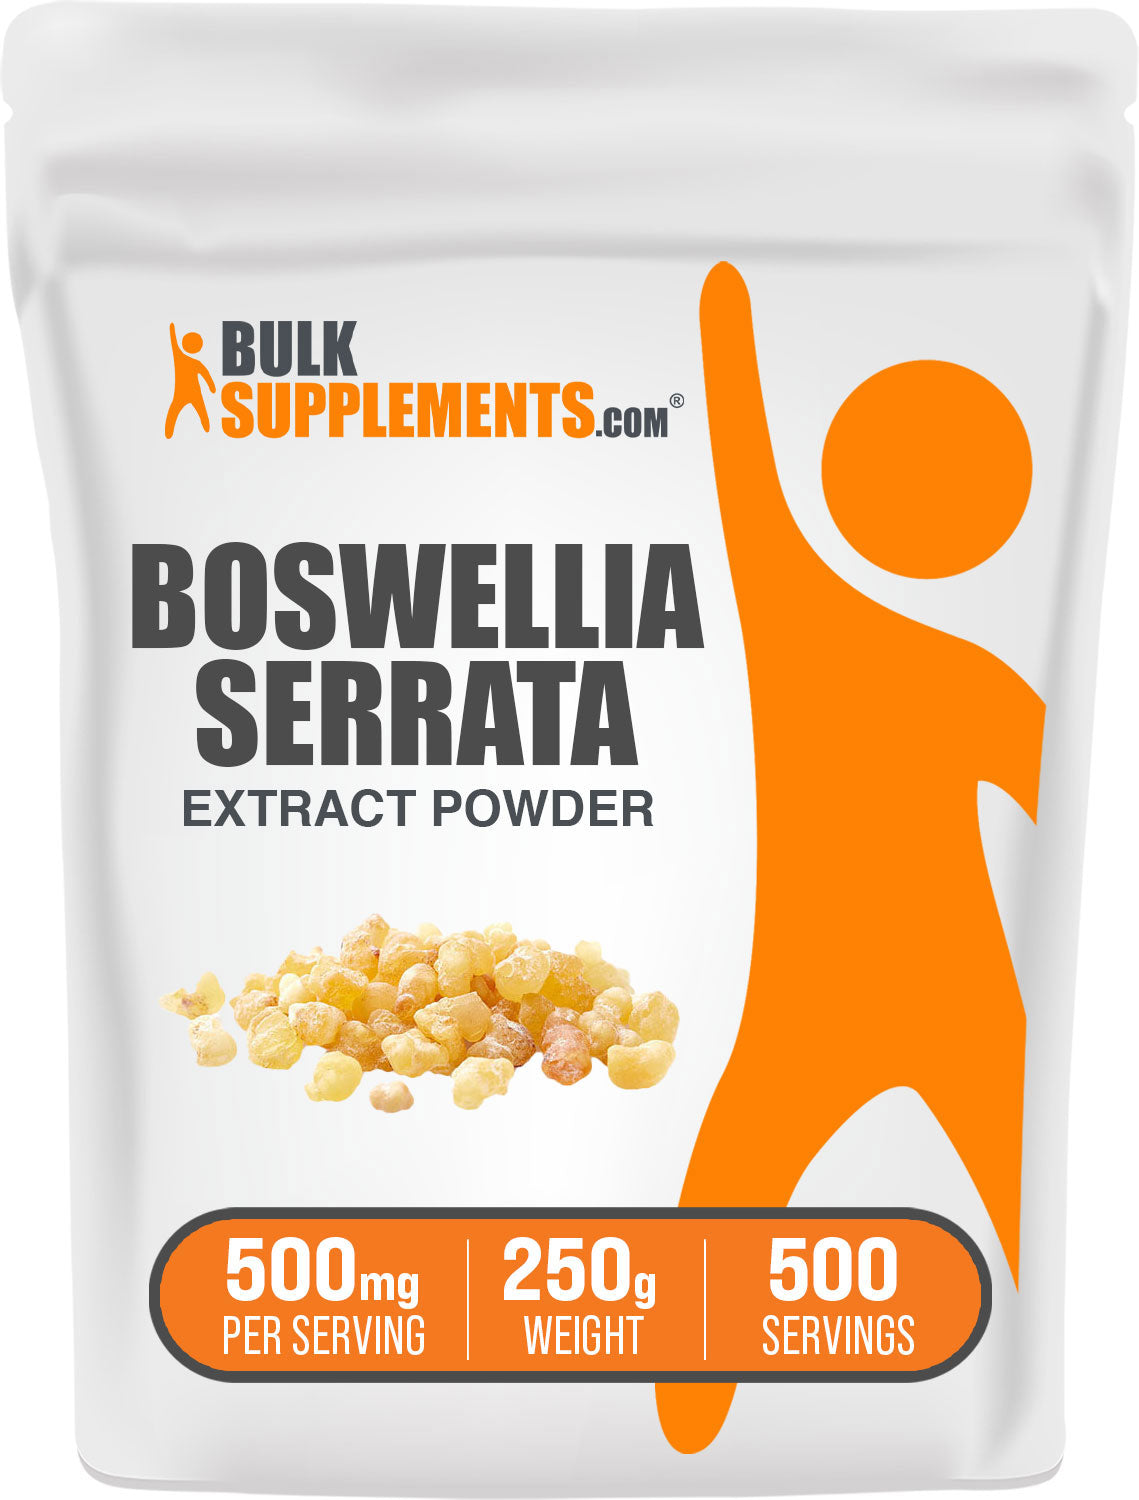 Boswellia Serrata Extract Powder 250g Bag